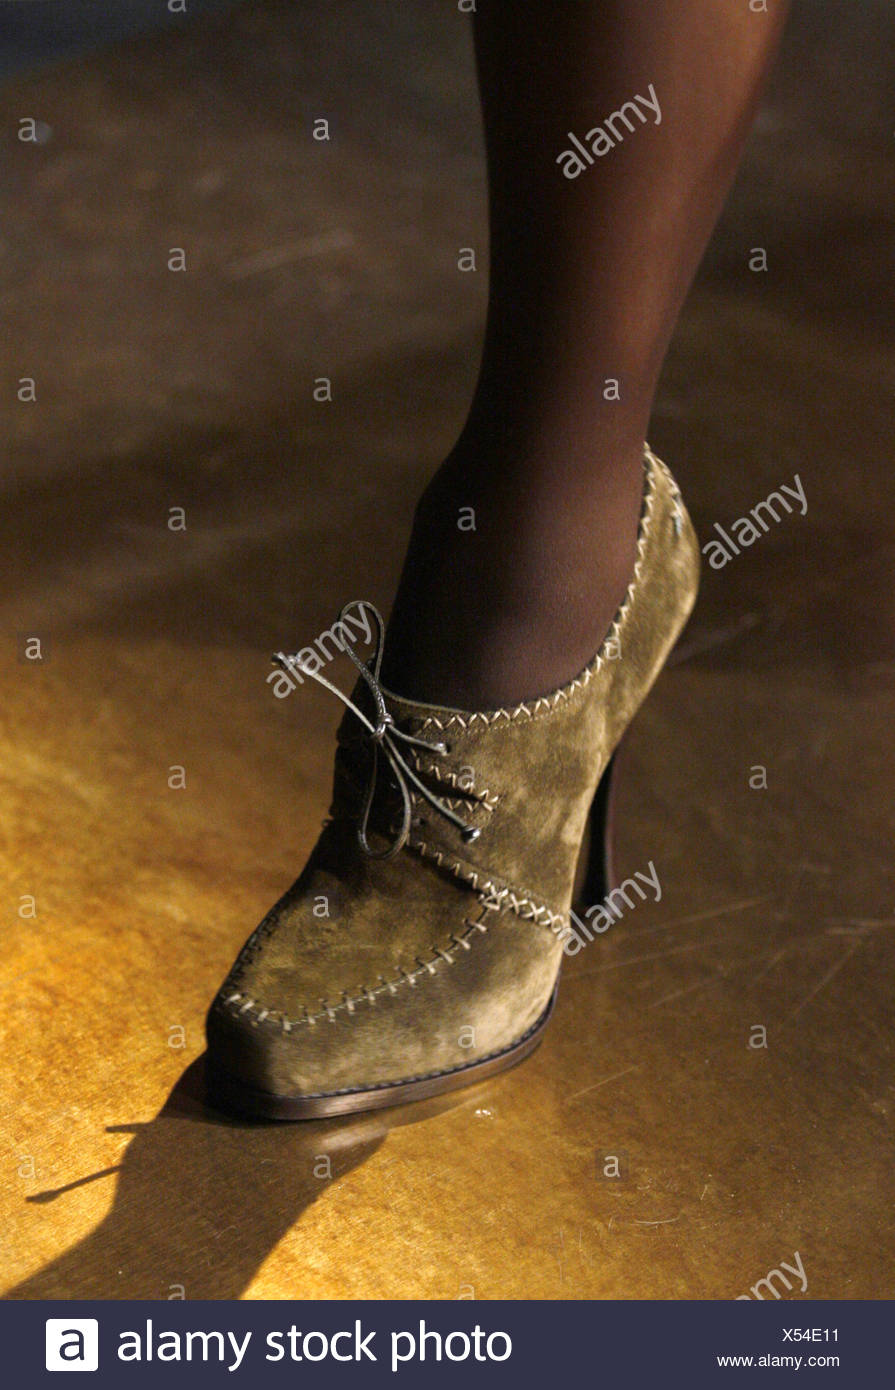 donna karan heels